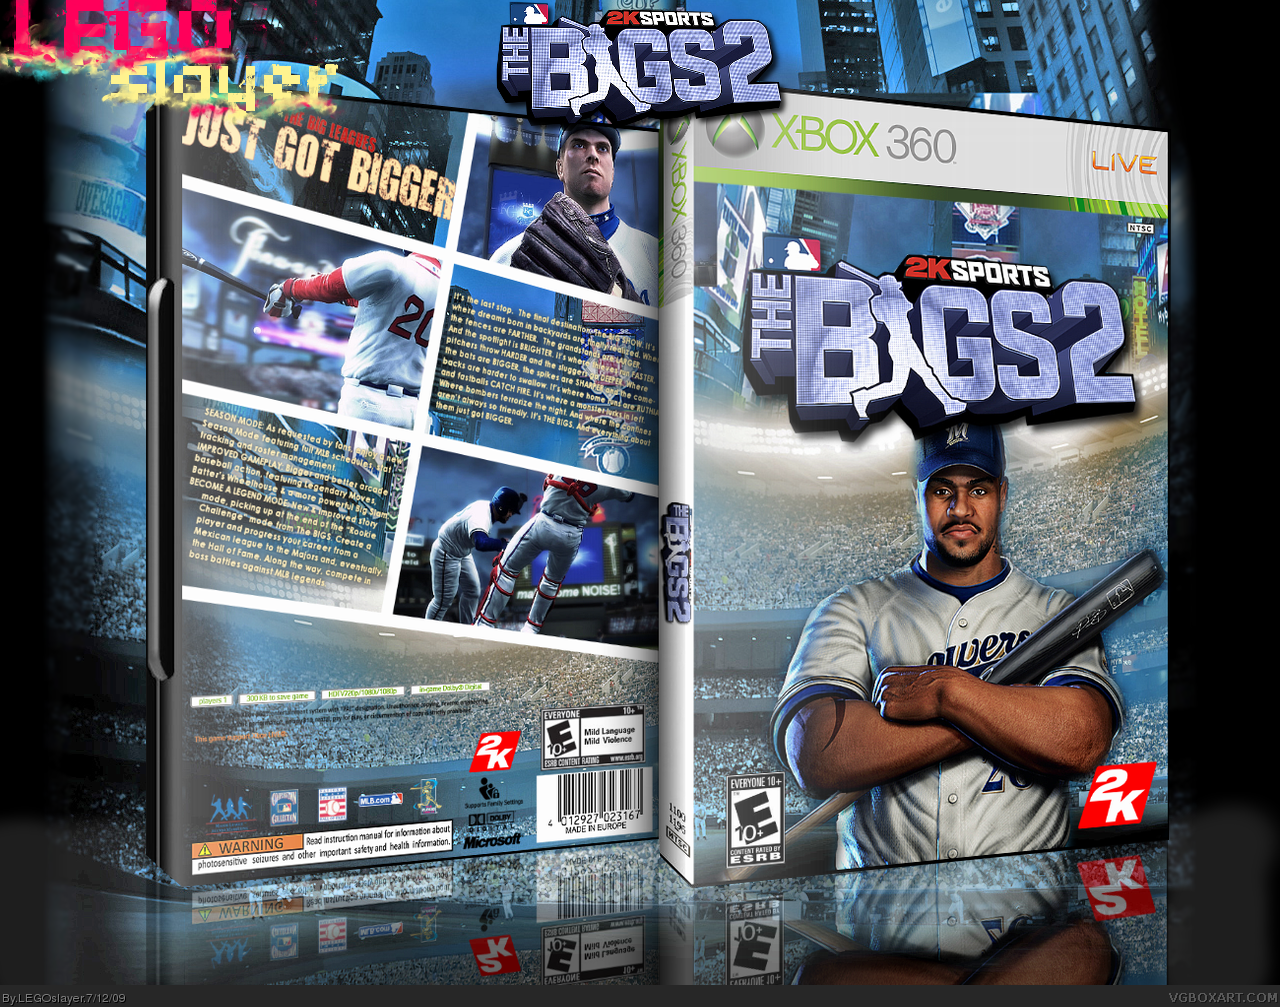 The Bigs 2 box cover